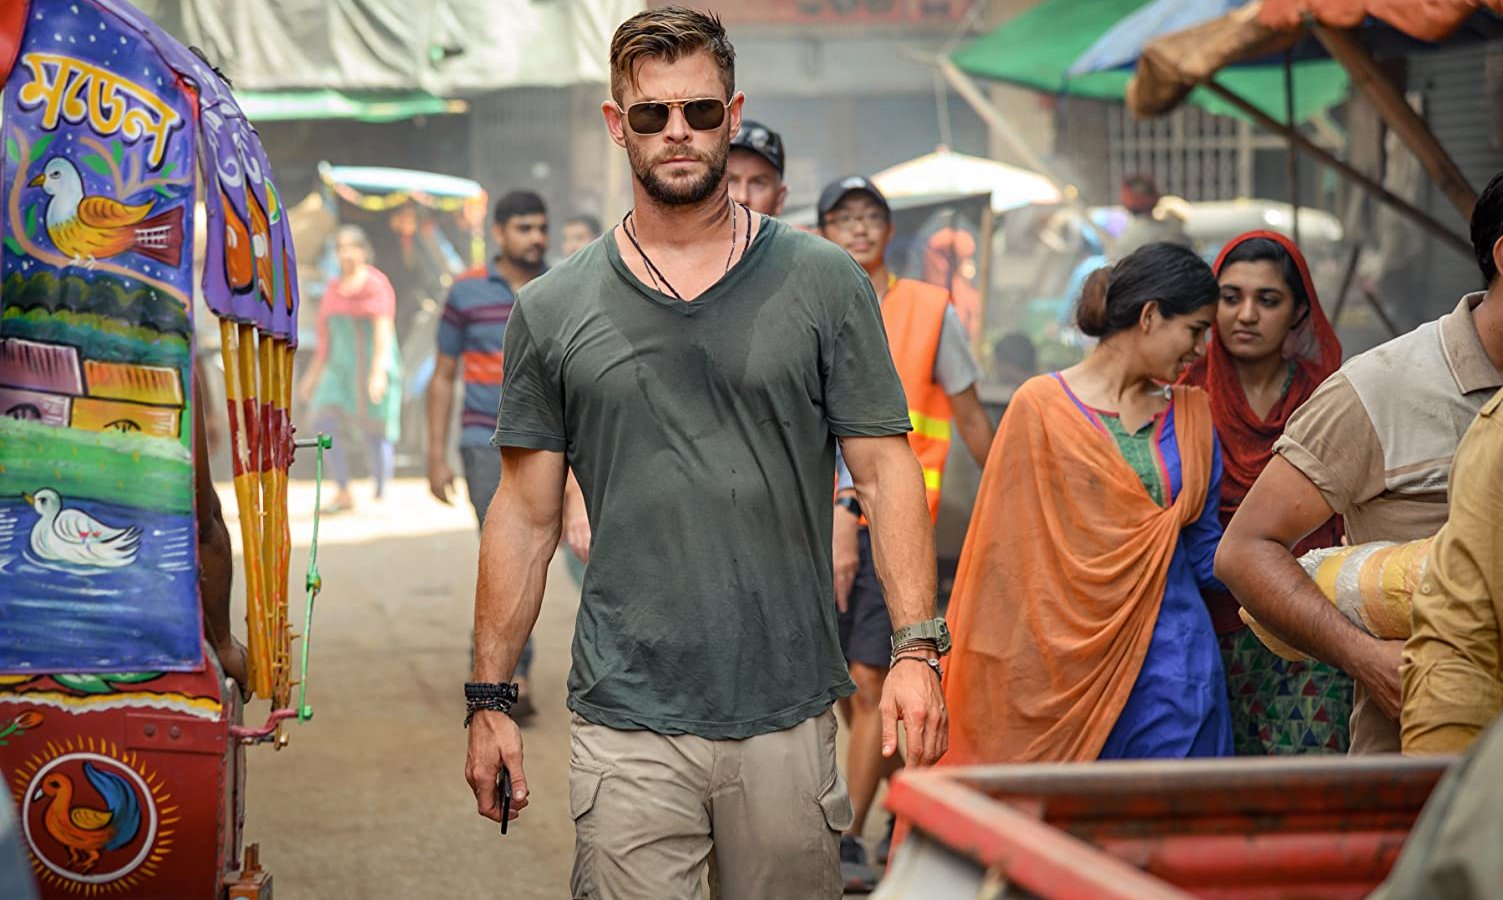 Extraction 2, una nuova immagine dal film Netflix mostra Chris Hemsworth pronto a combattere